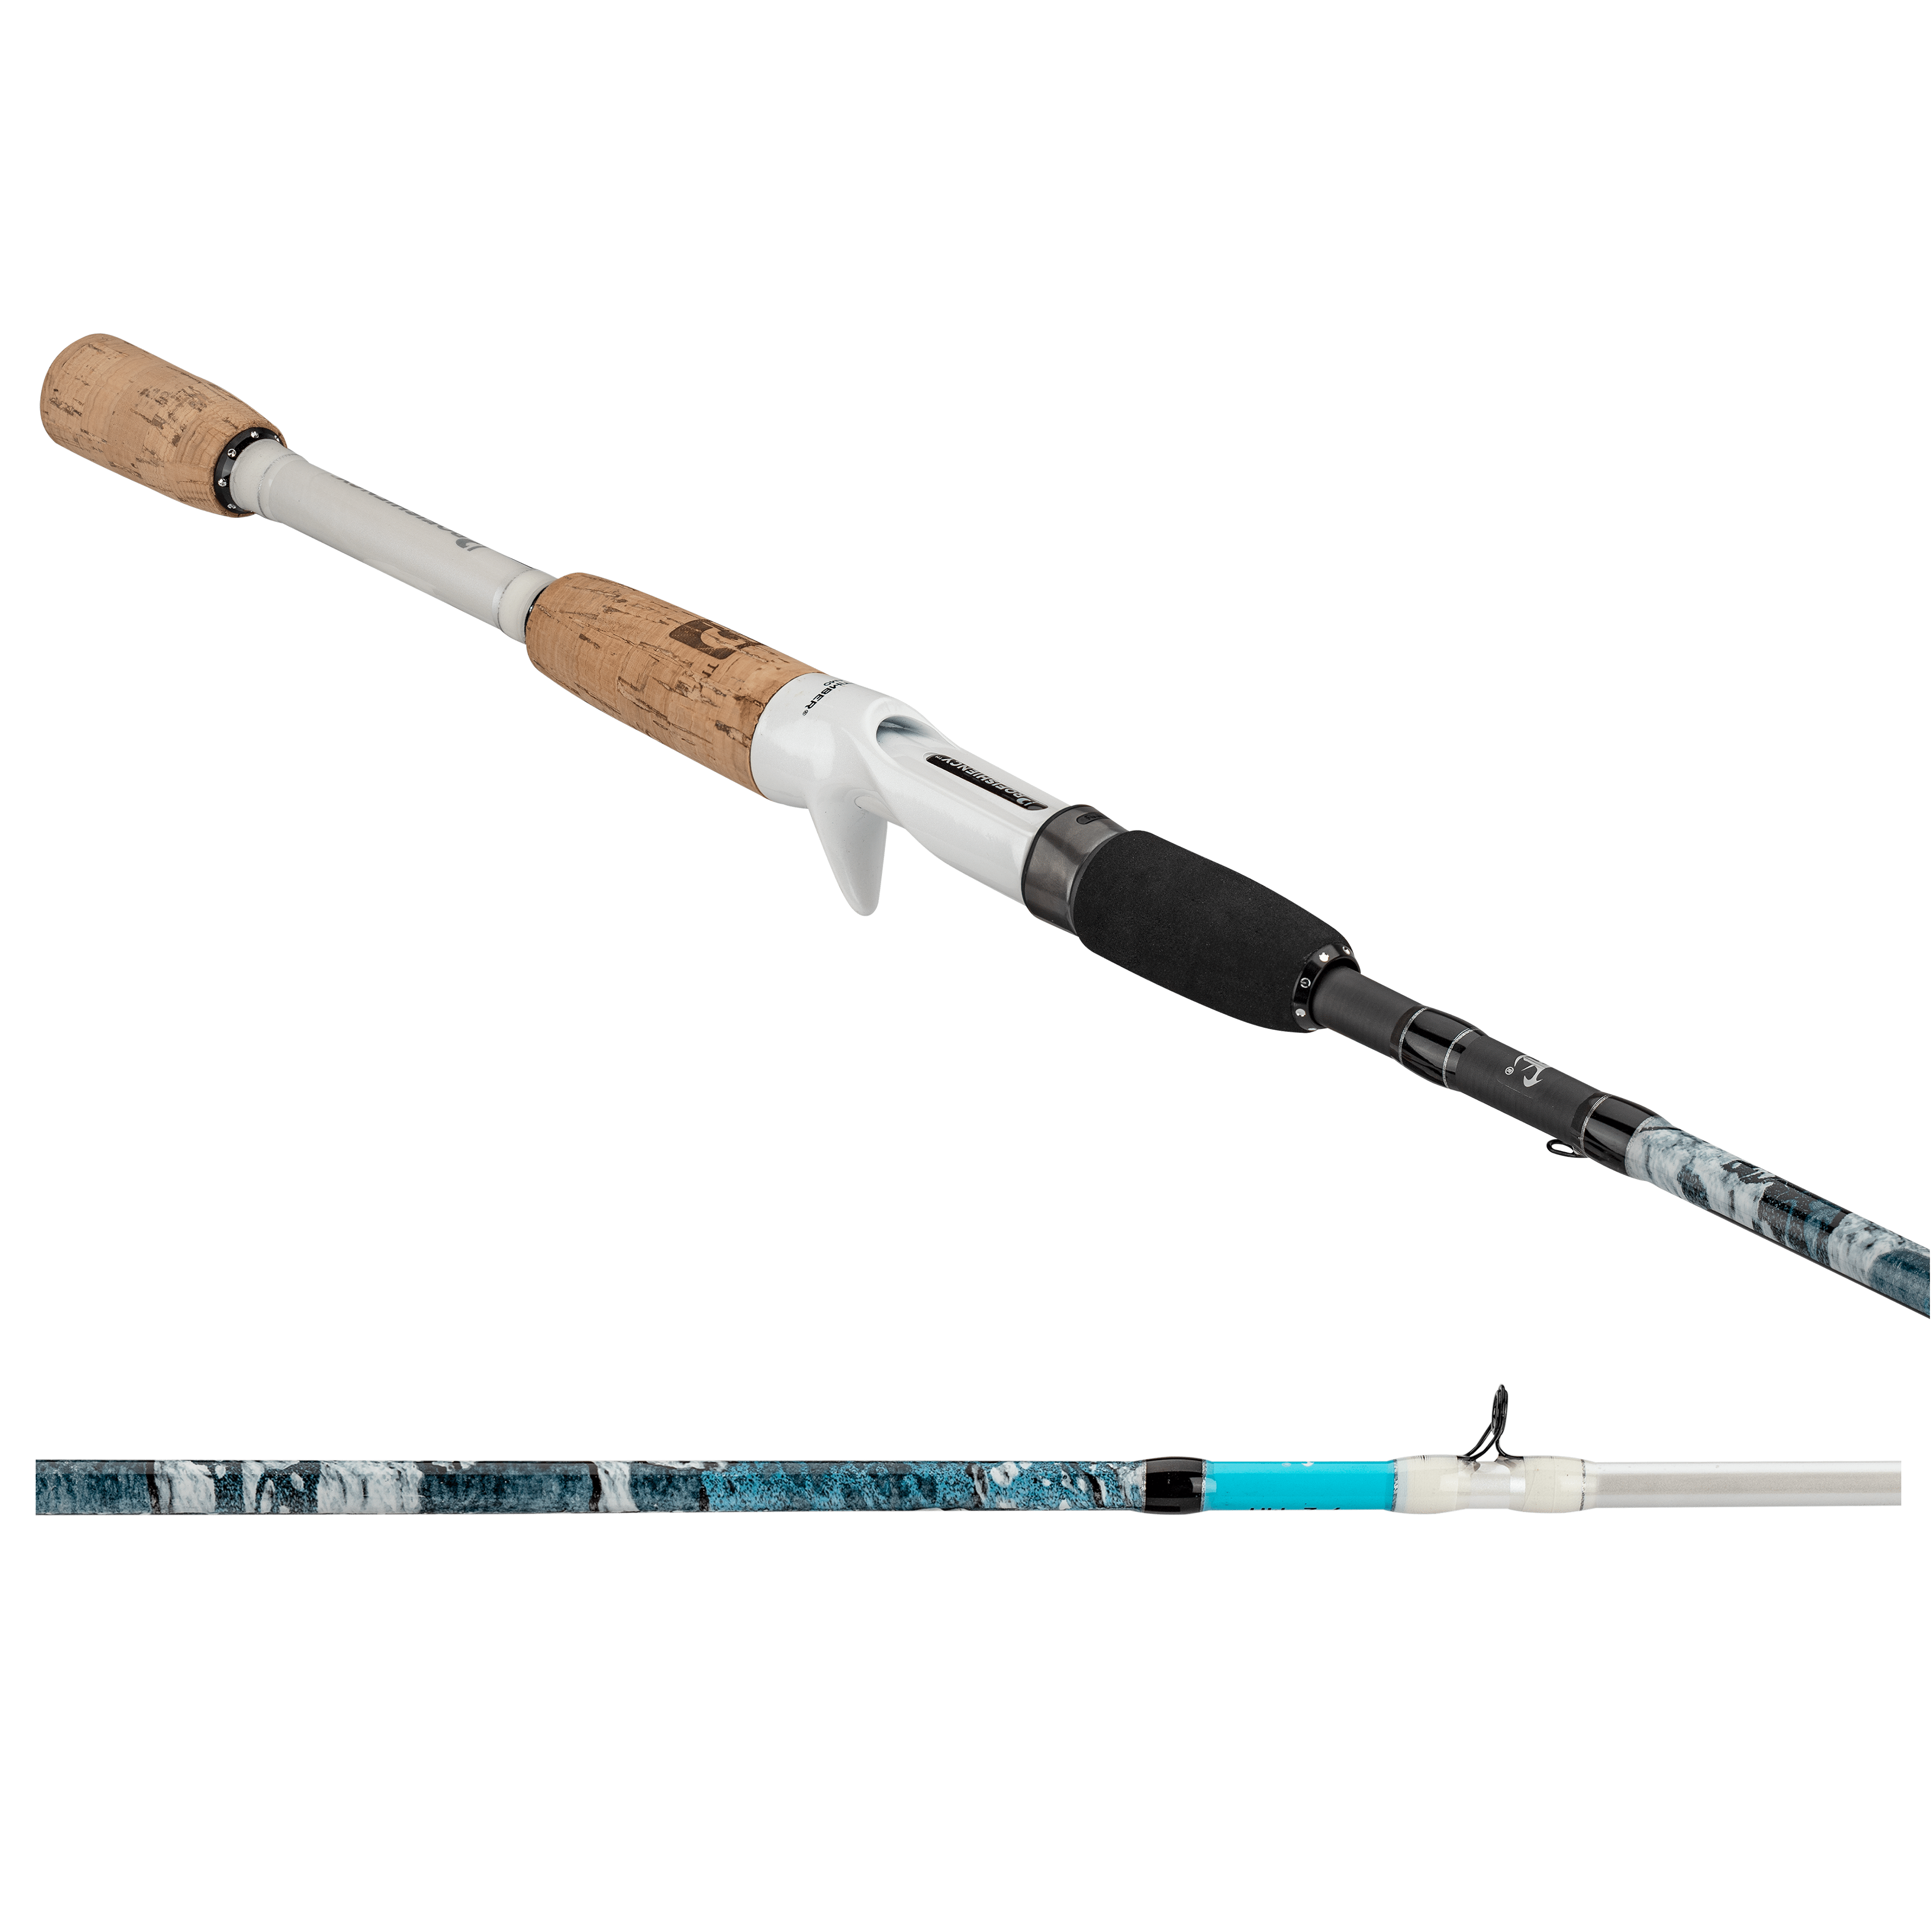 13 Fishing Blackout - 7'3 MH Casting Rod